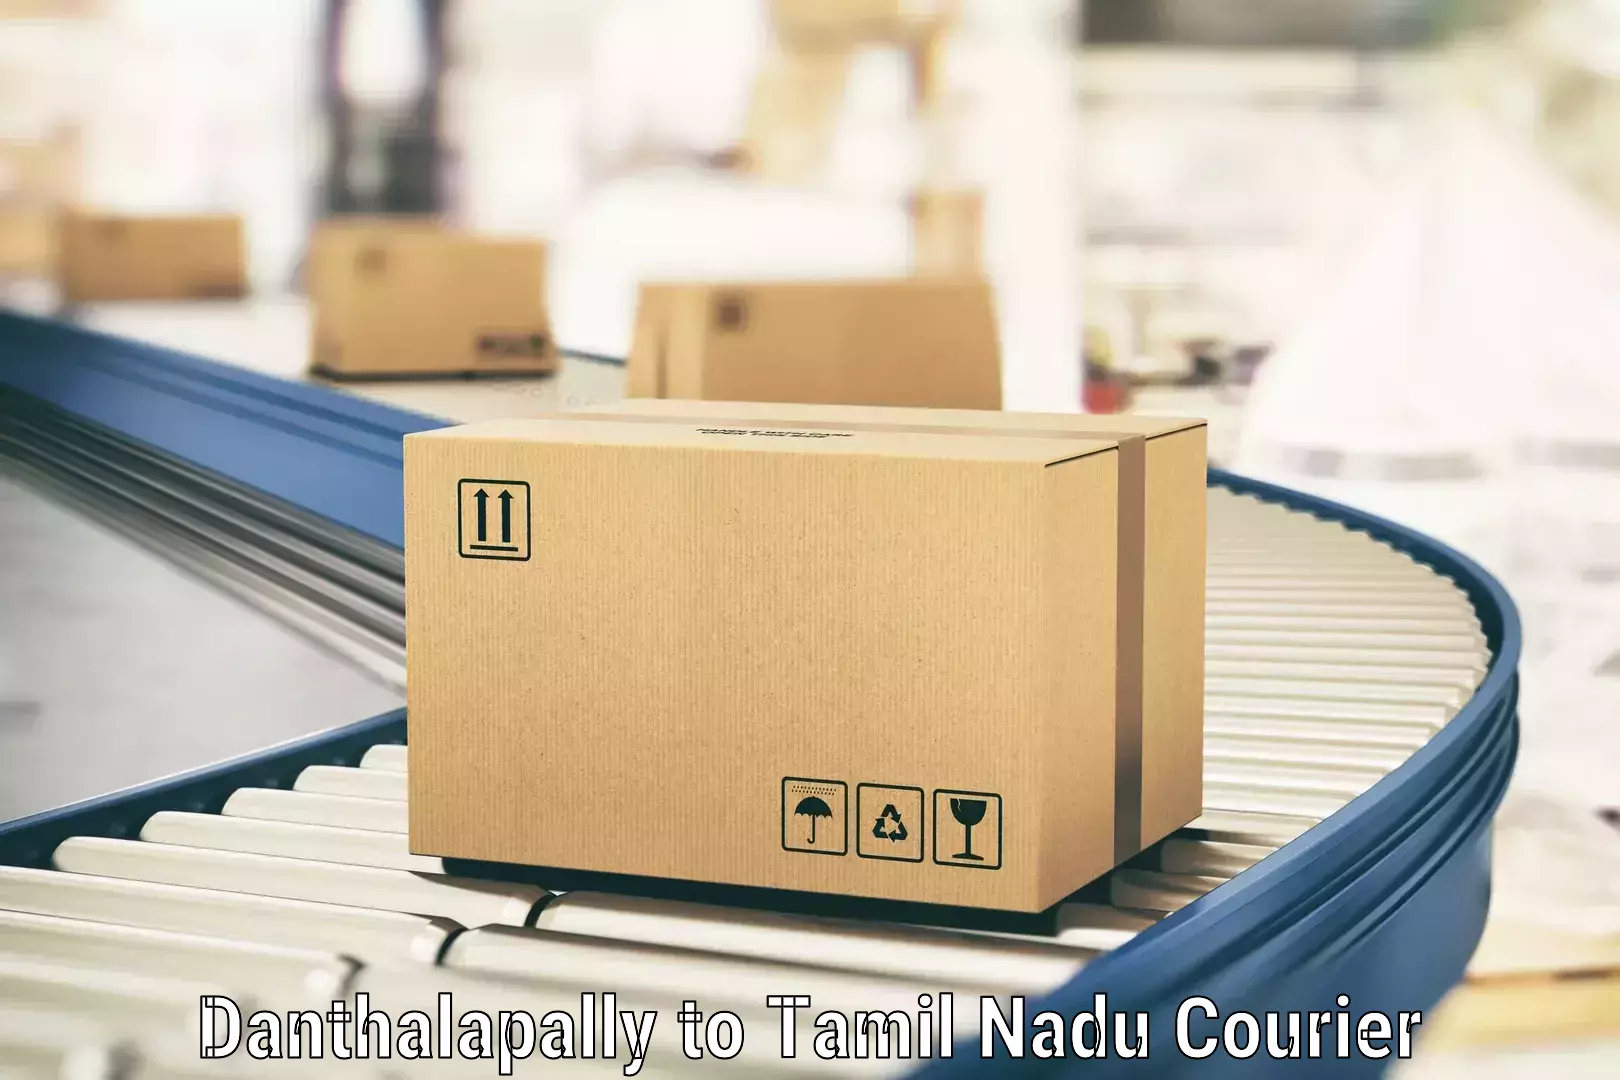 Supply chain efficiency in Danthalapally to Nilakottai